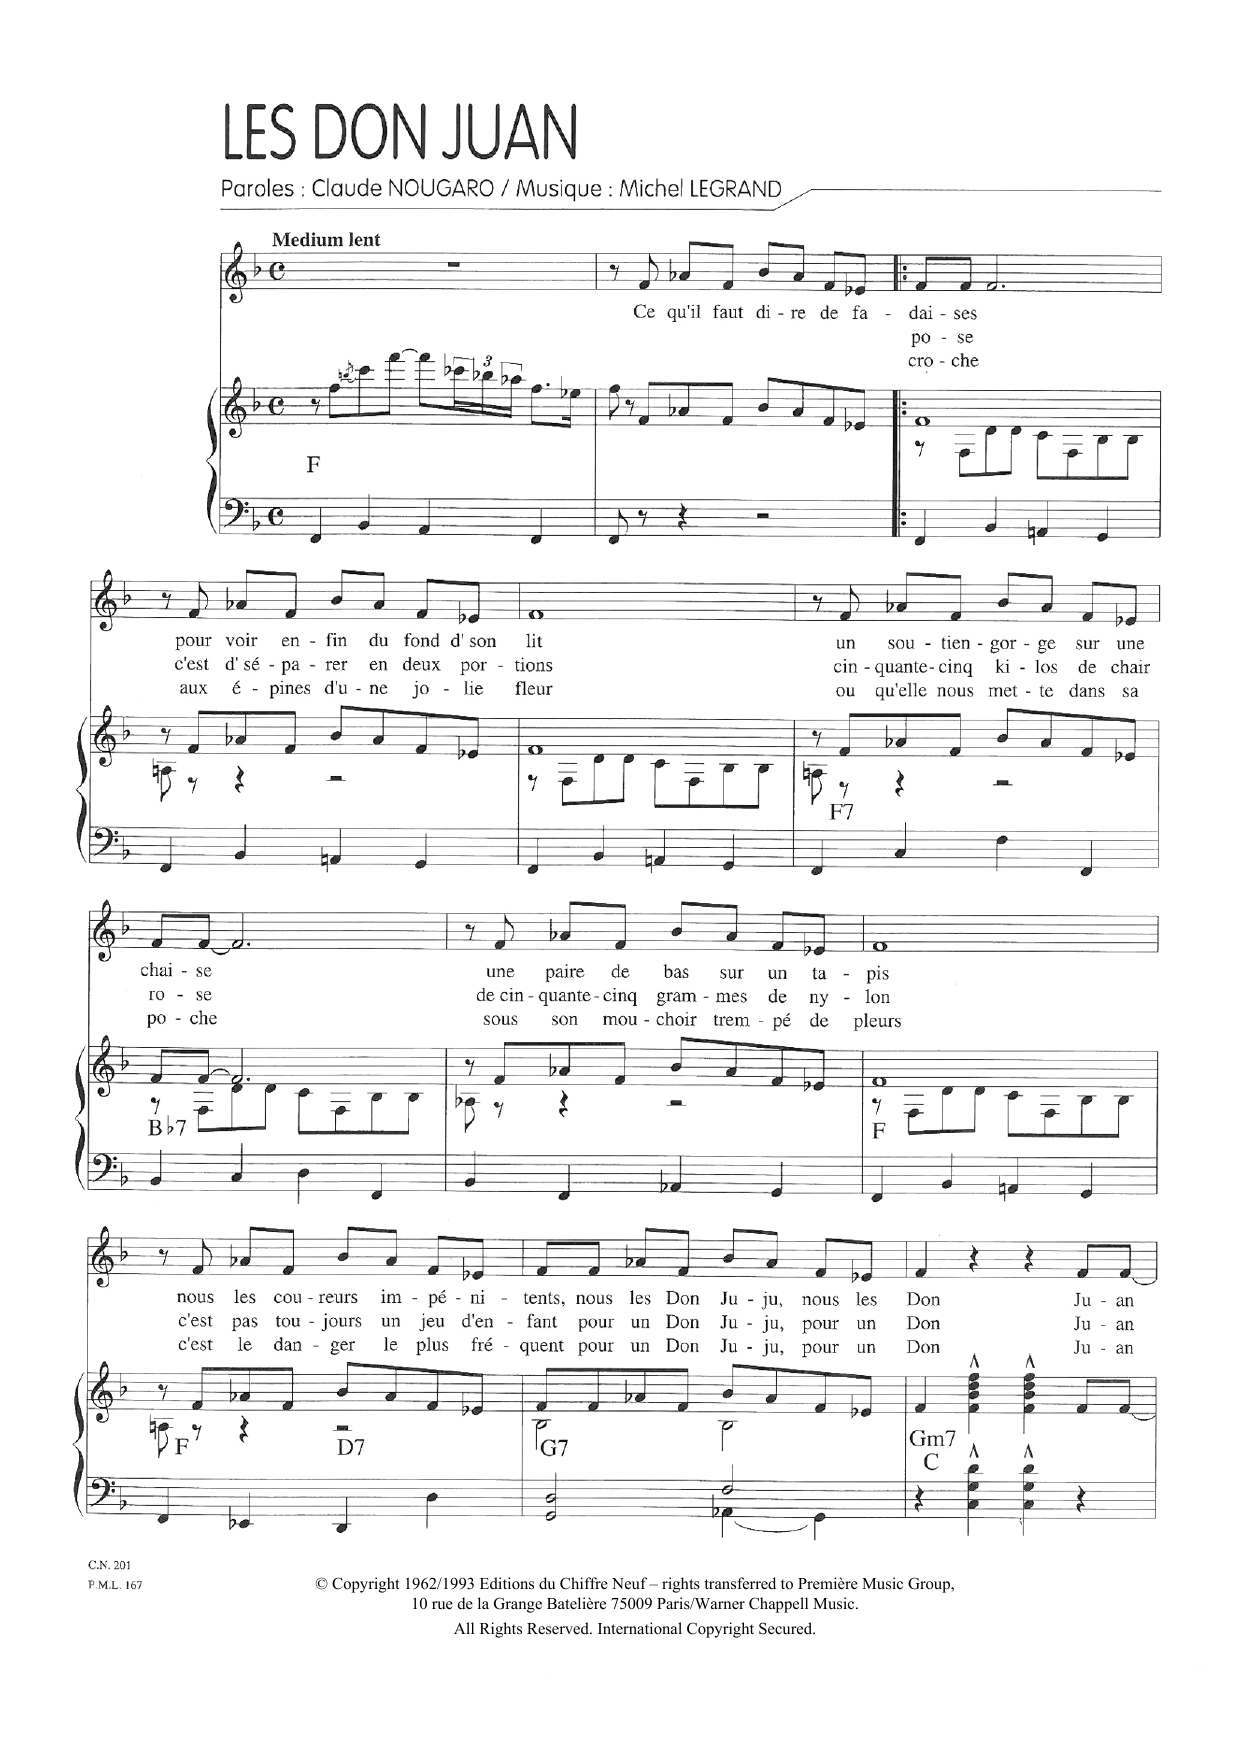 Claude Nougaro Les Don Juan Sheet Music Notes & Chords for Piano & Vocal - Download or Print PDF